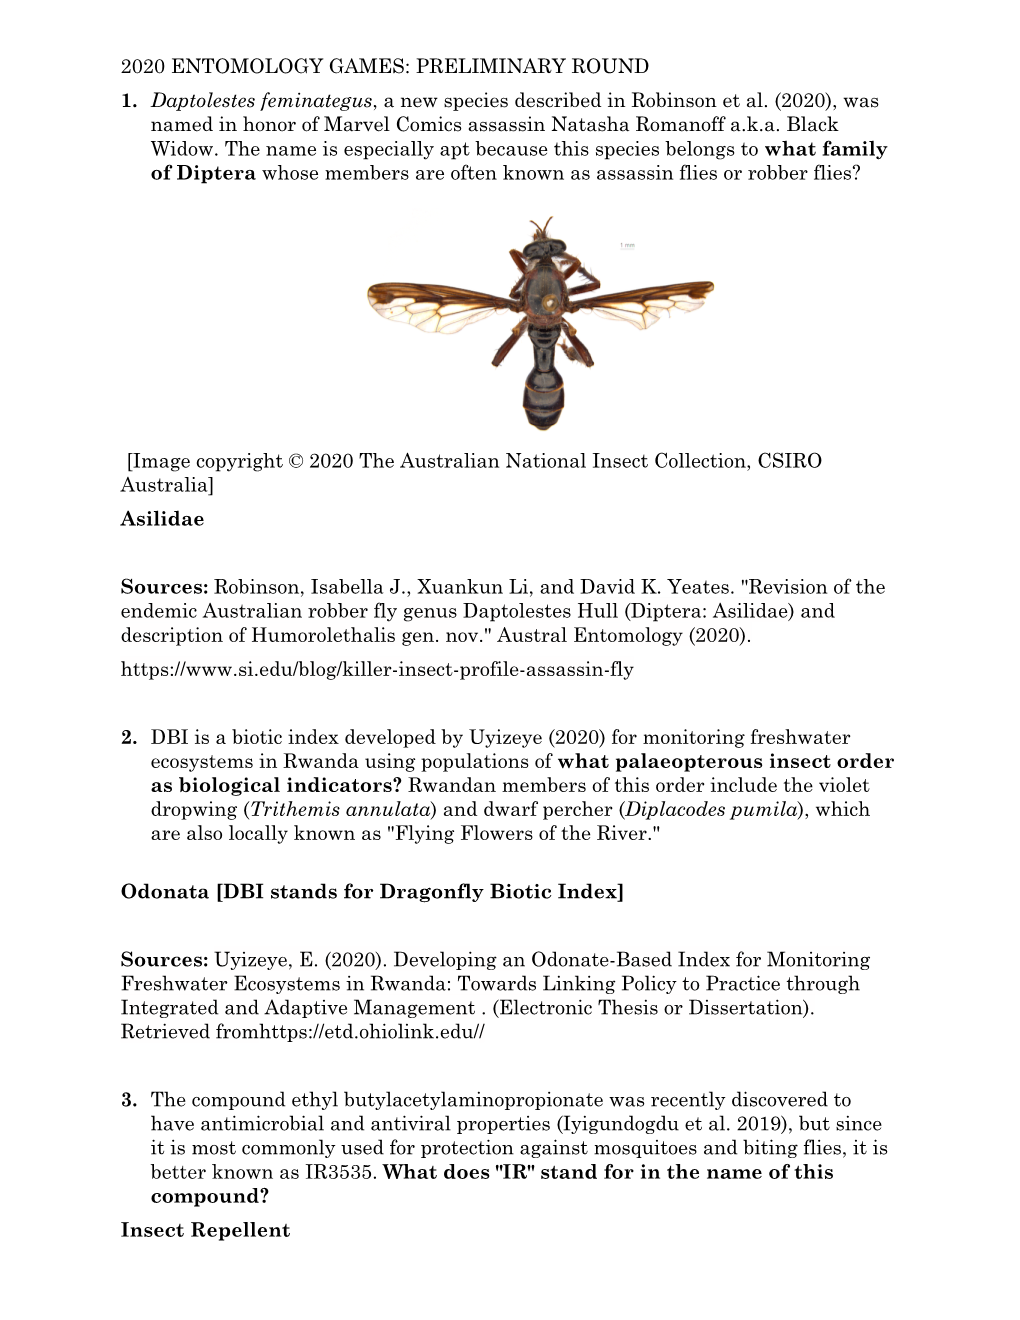 2020 Entomology Games Preliminary Round Answers